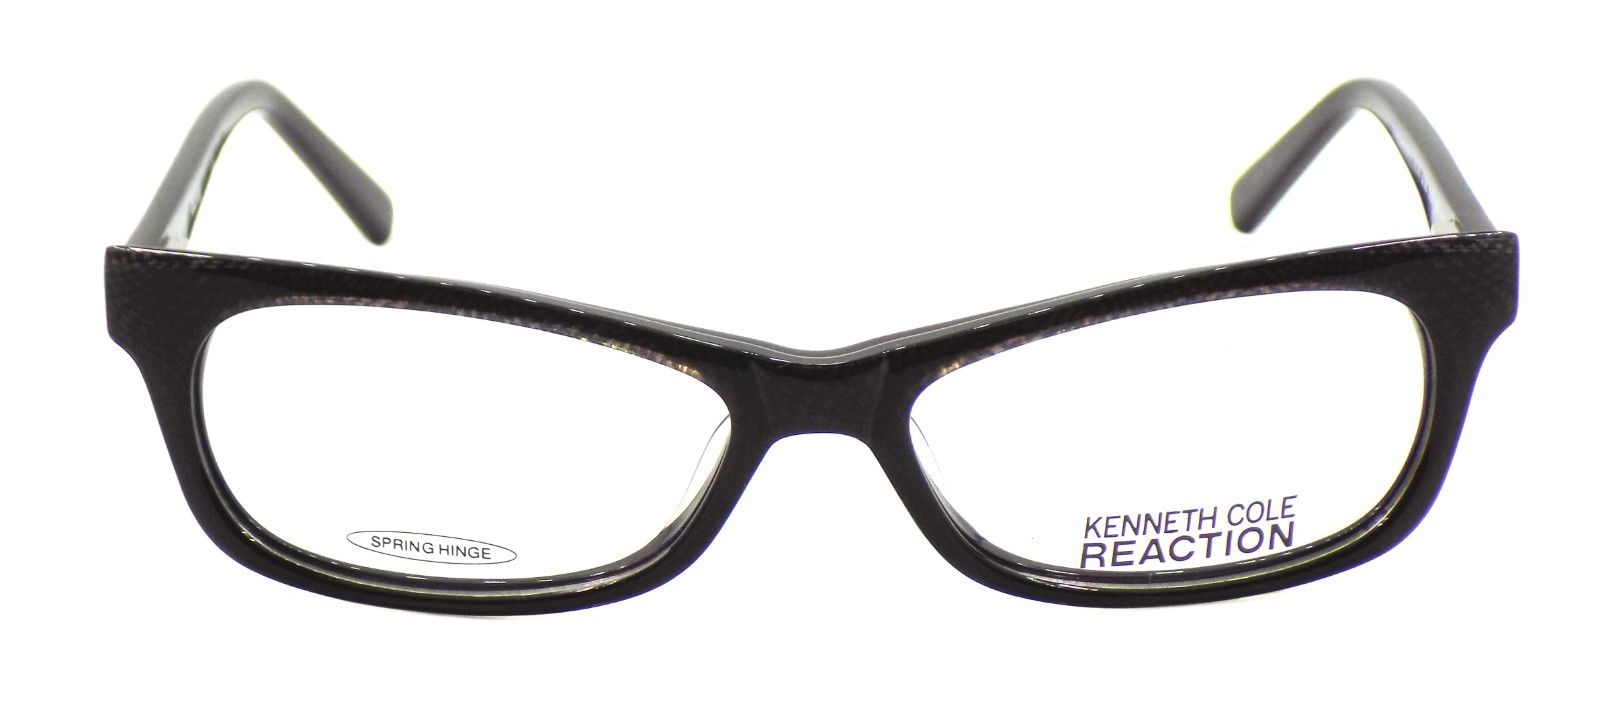 2-Kenneth Cole REACTION KC746 005 Women's Eyeglasses Frames 53-15-135 Black + CASE-664689599431-IKSpecs